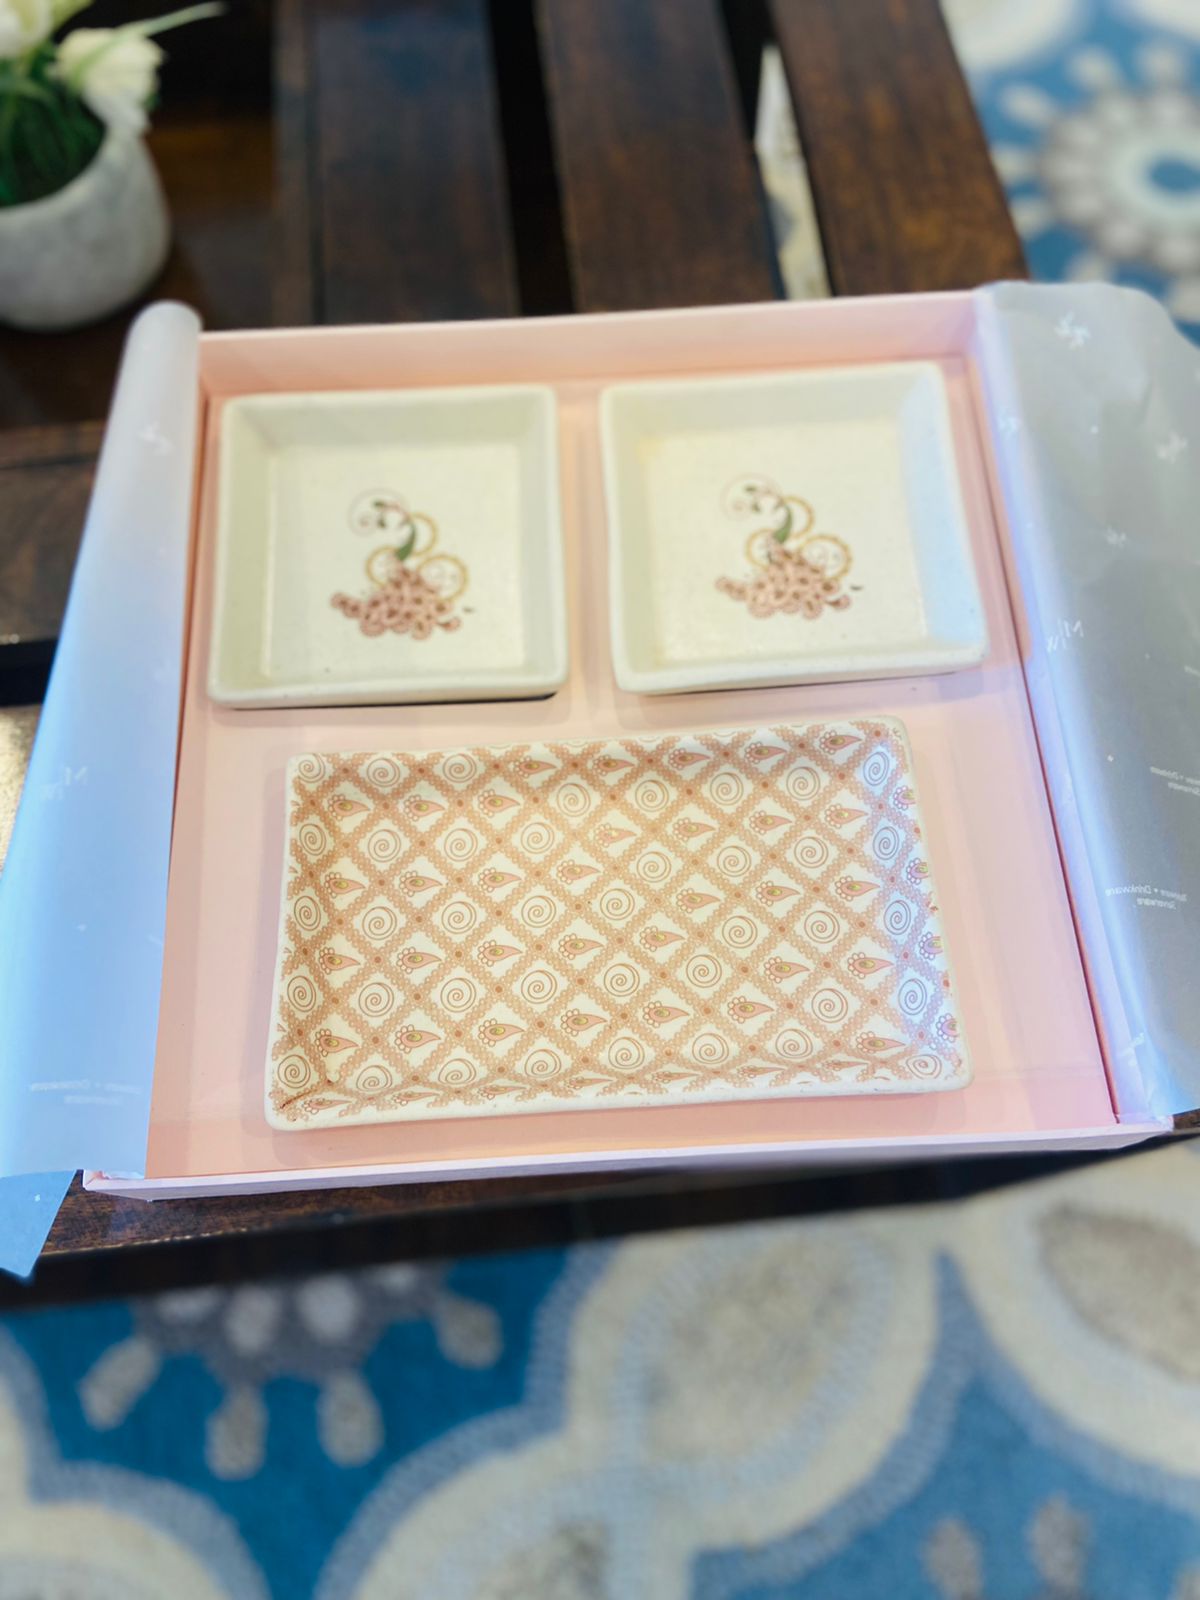 3 Platter Printed Gift Set - Peacock l Ceramic Platters l Serving Platters